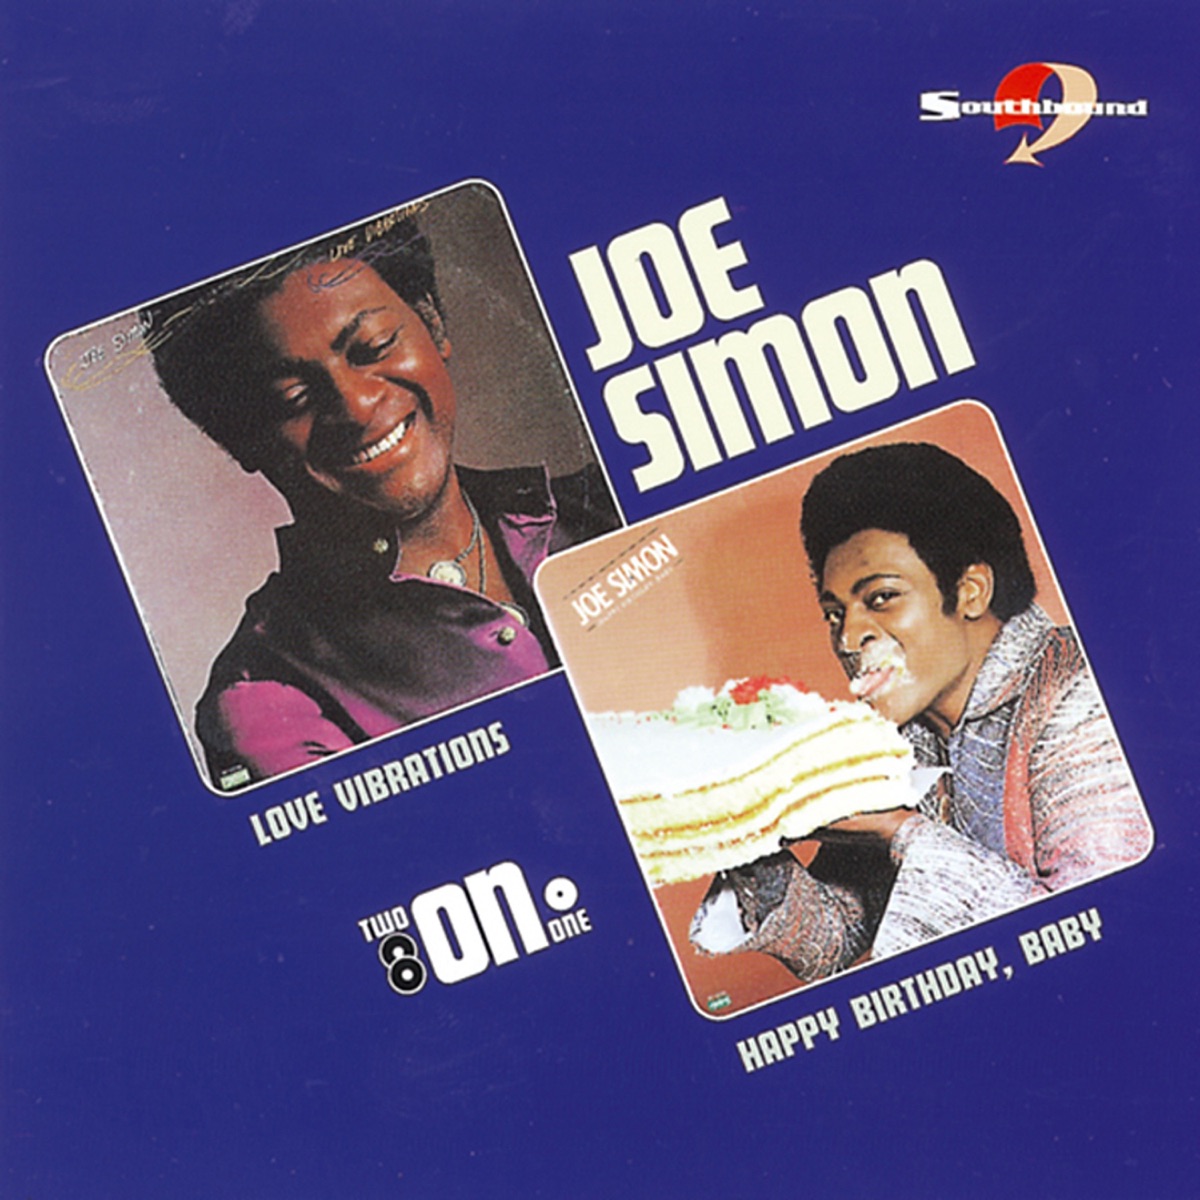 The Power of Joe Simon by Joe Simon on Apple Music